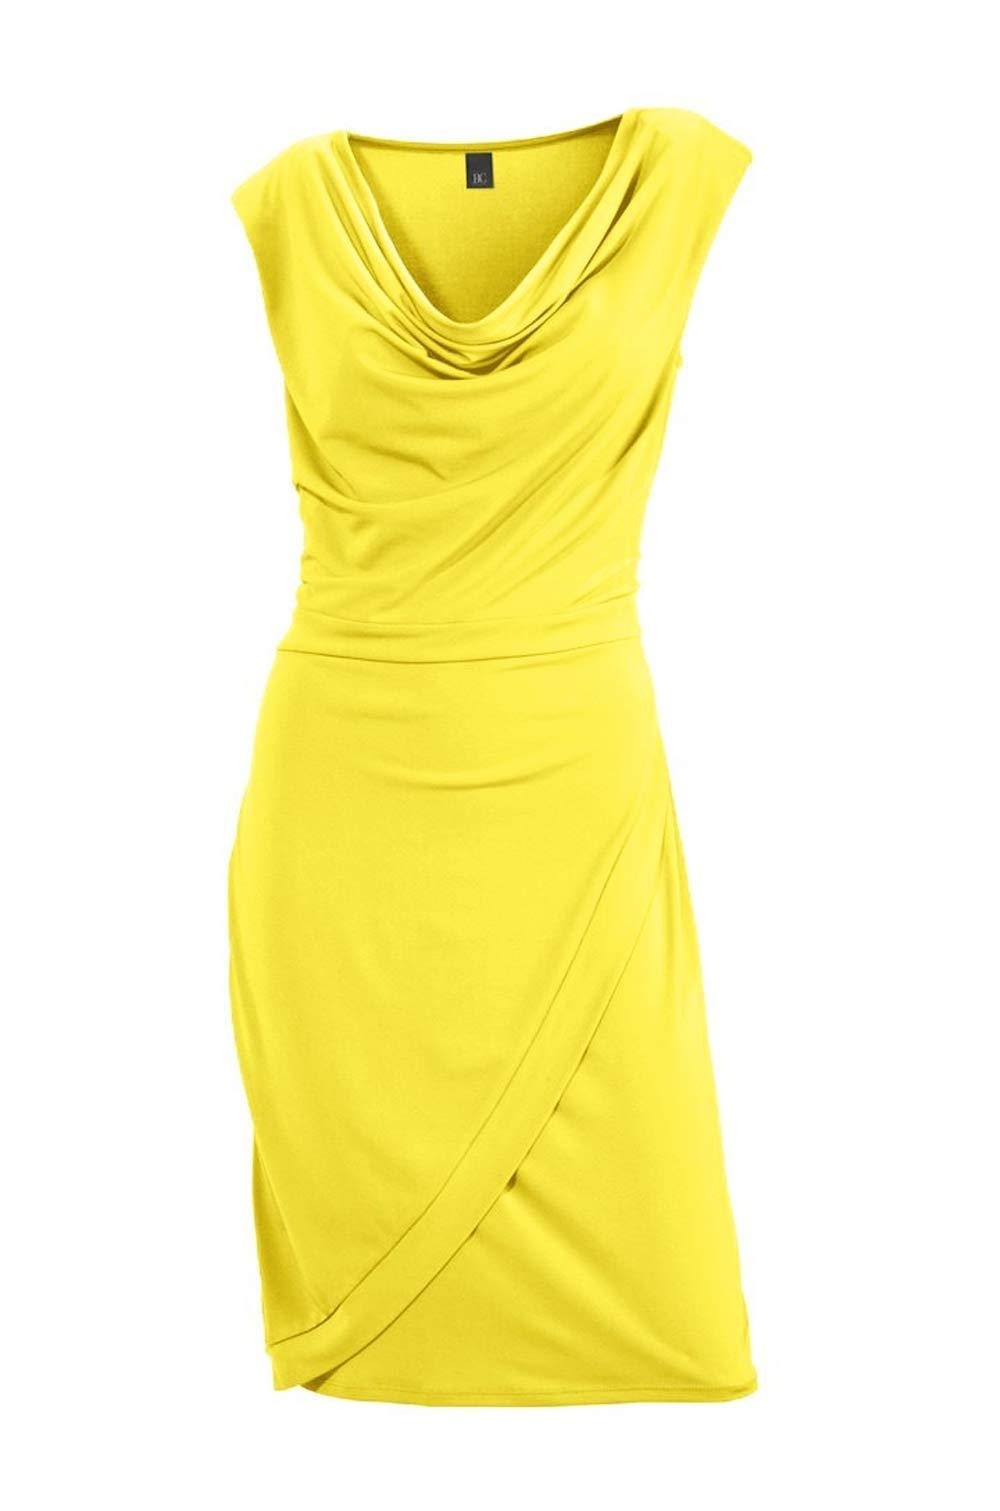 Formal Top Kleid Gelb Galerie13 Luxus Kleid Gelb Stylish